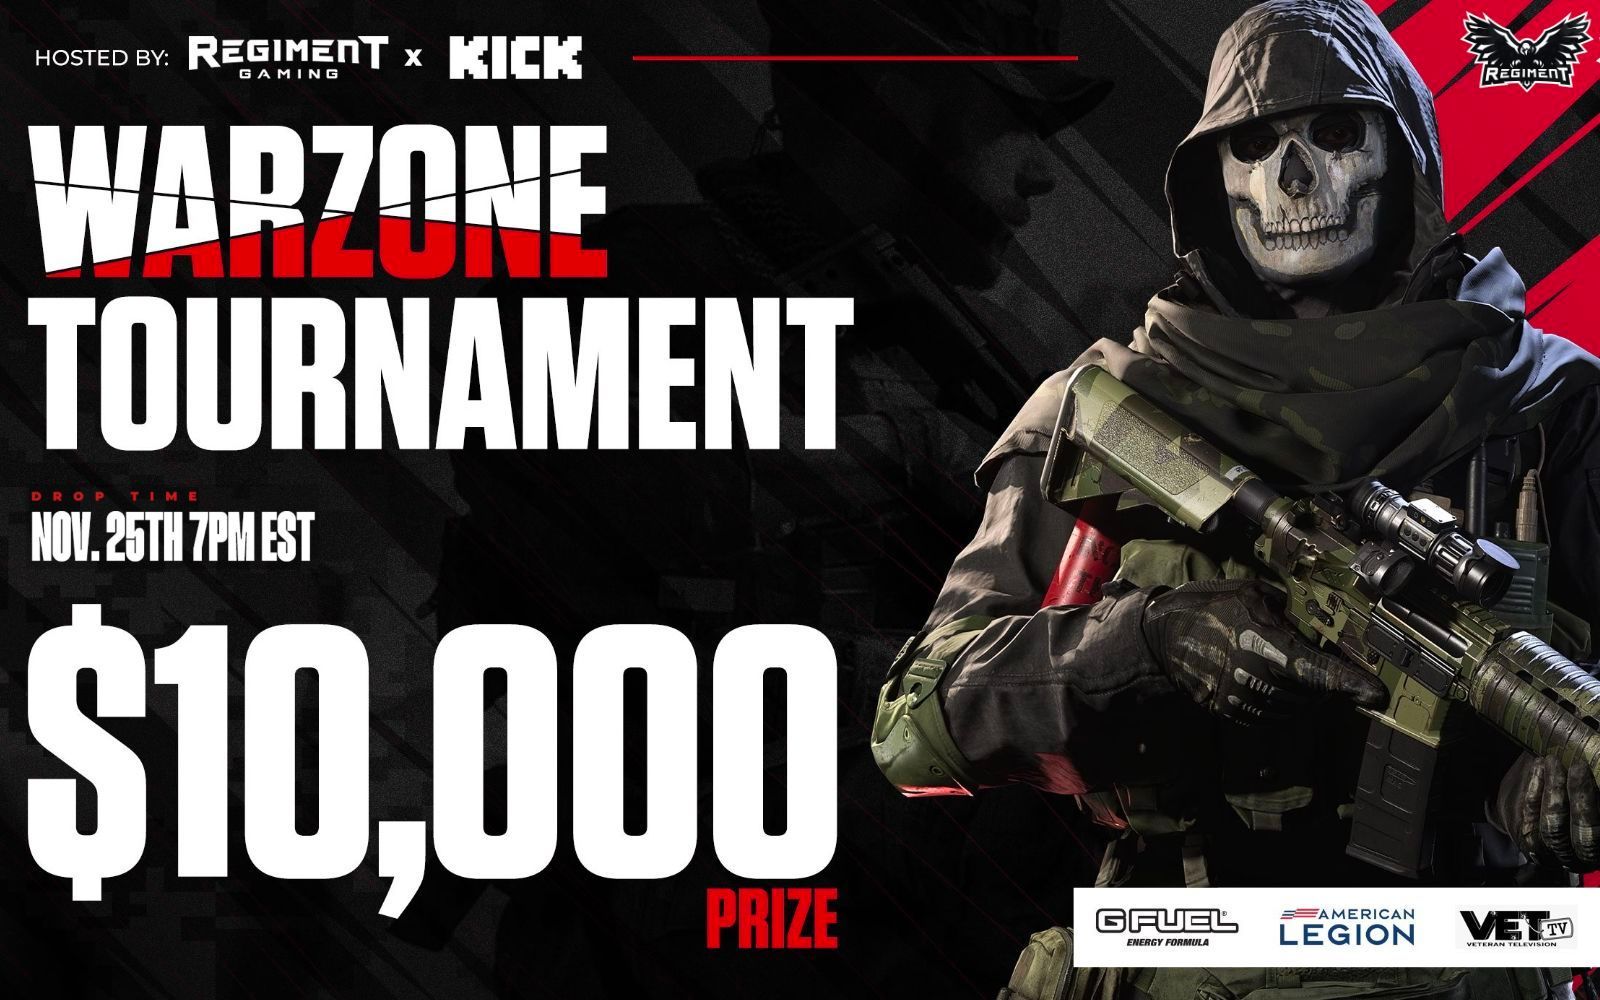 $10,000 REGIMENT x Kick Warzone Tournament